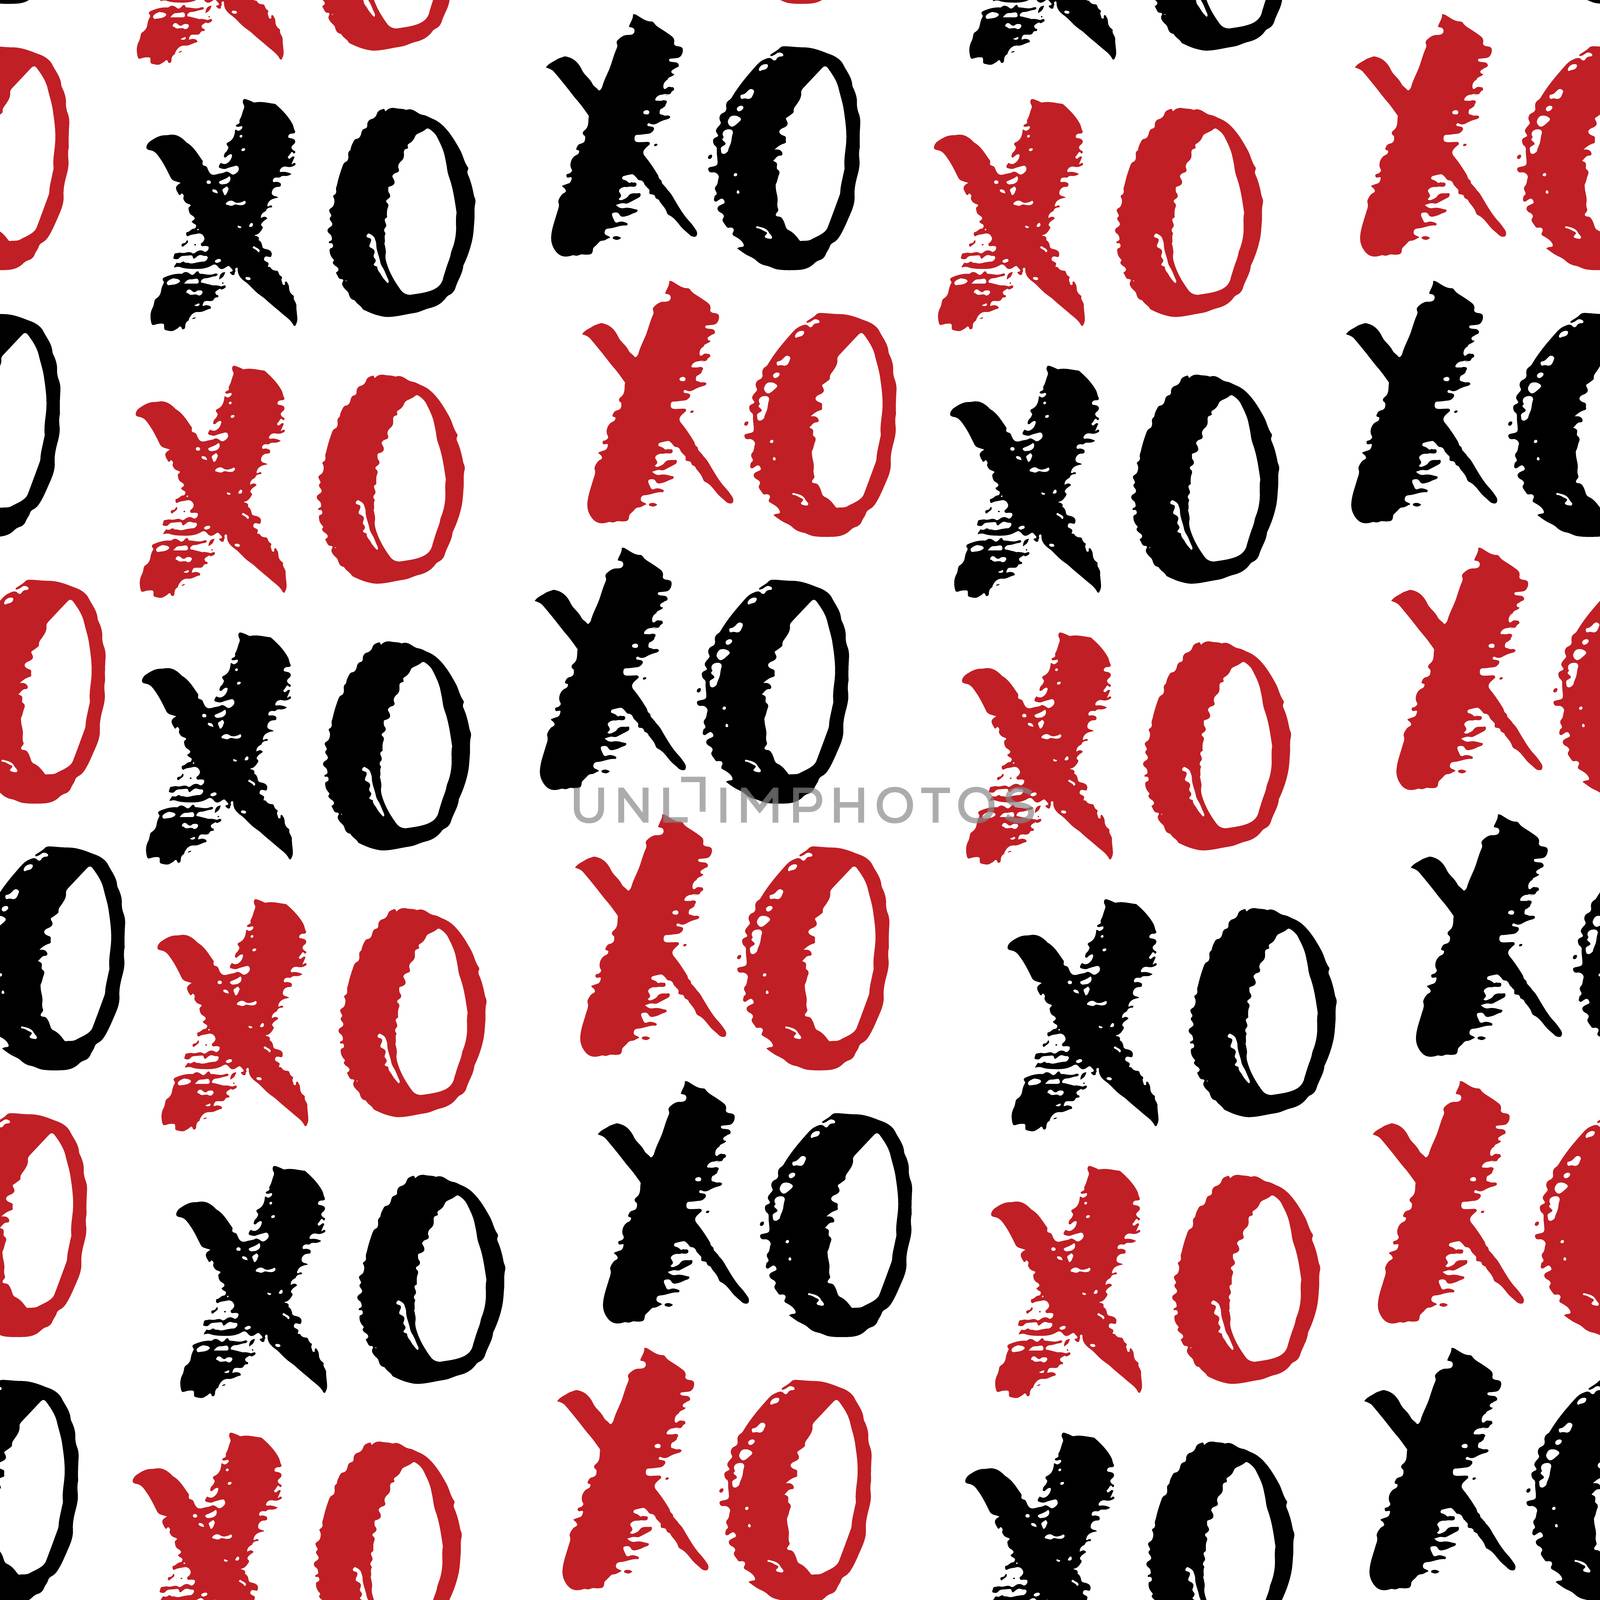 XOXO brush lettering signs seamless pattern, Grunge calligraphiv c hugs and kisses Phrase, Internet slang abbreviation XOXO symbols, vector illustration isolated on white background